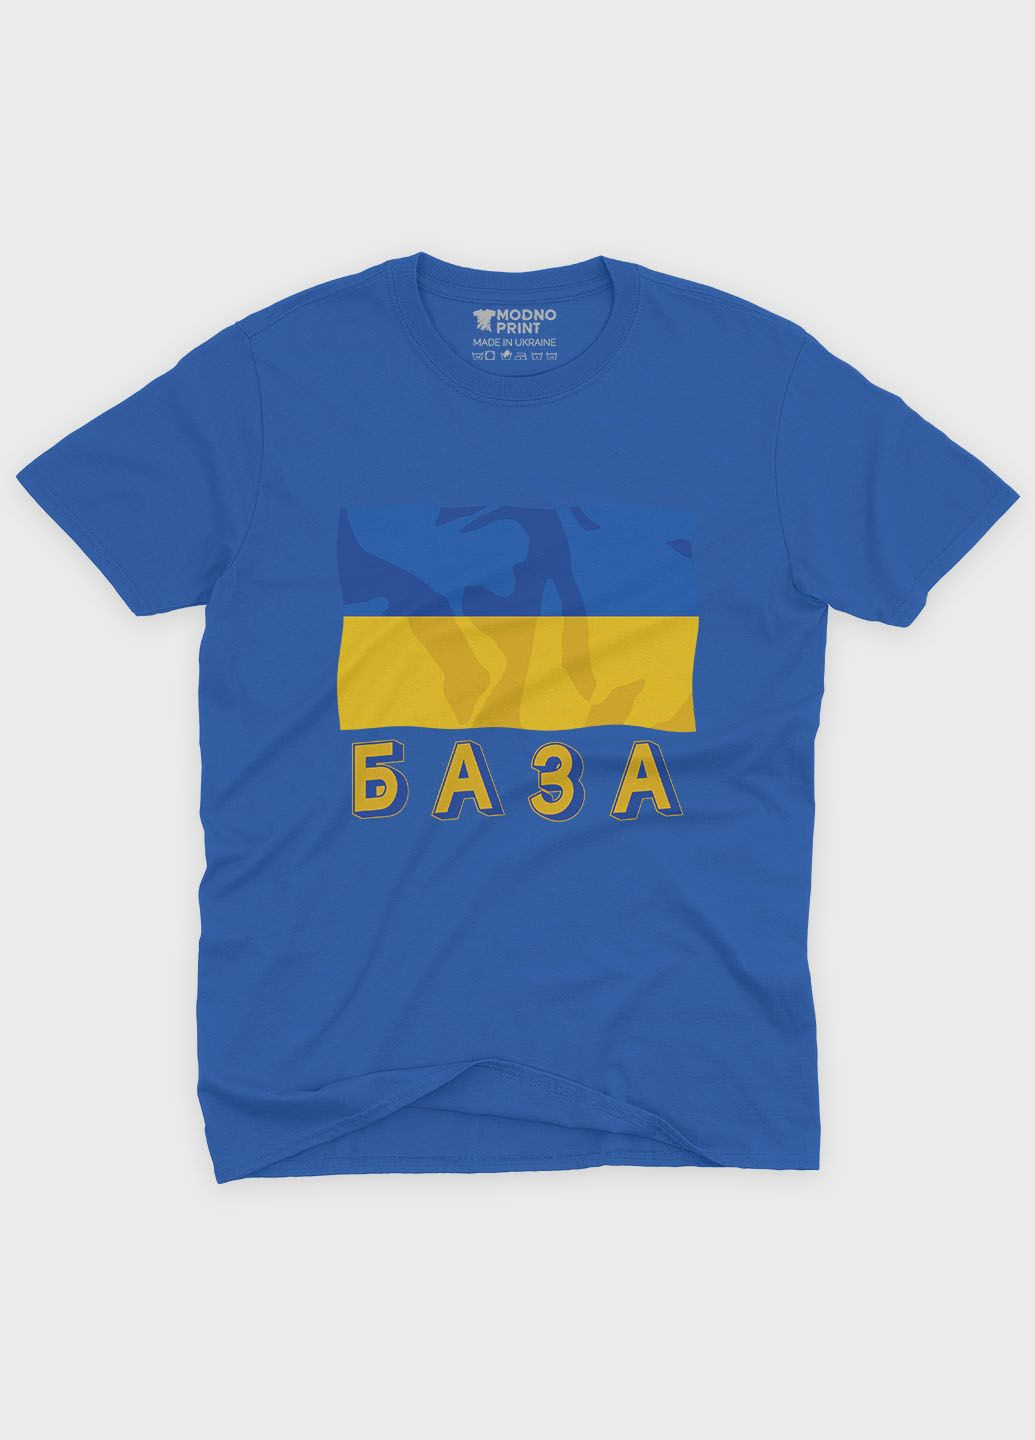 Мужская футболка с патриотическим принтом БАЗА (TS001-5-BRR-005-1-136-F) Modno - (285771133)